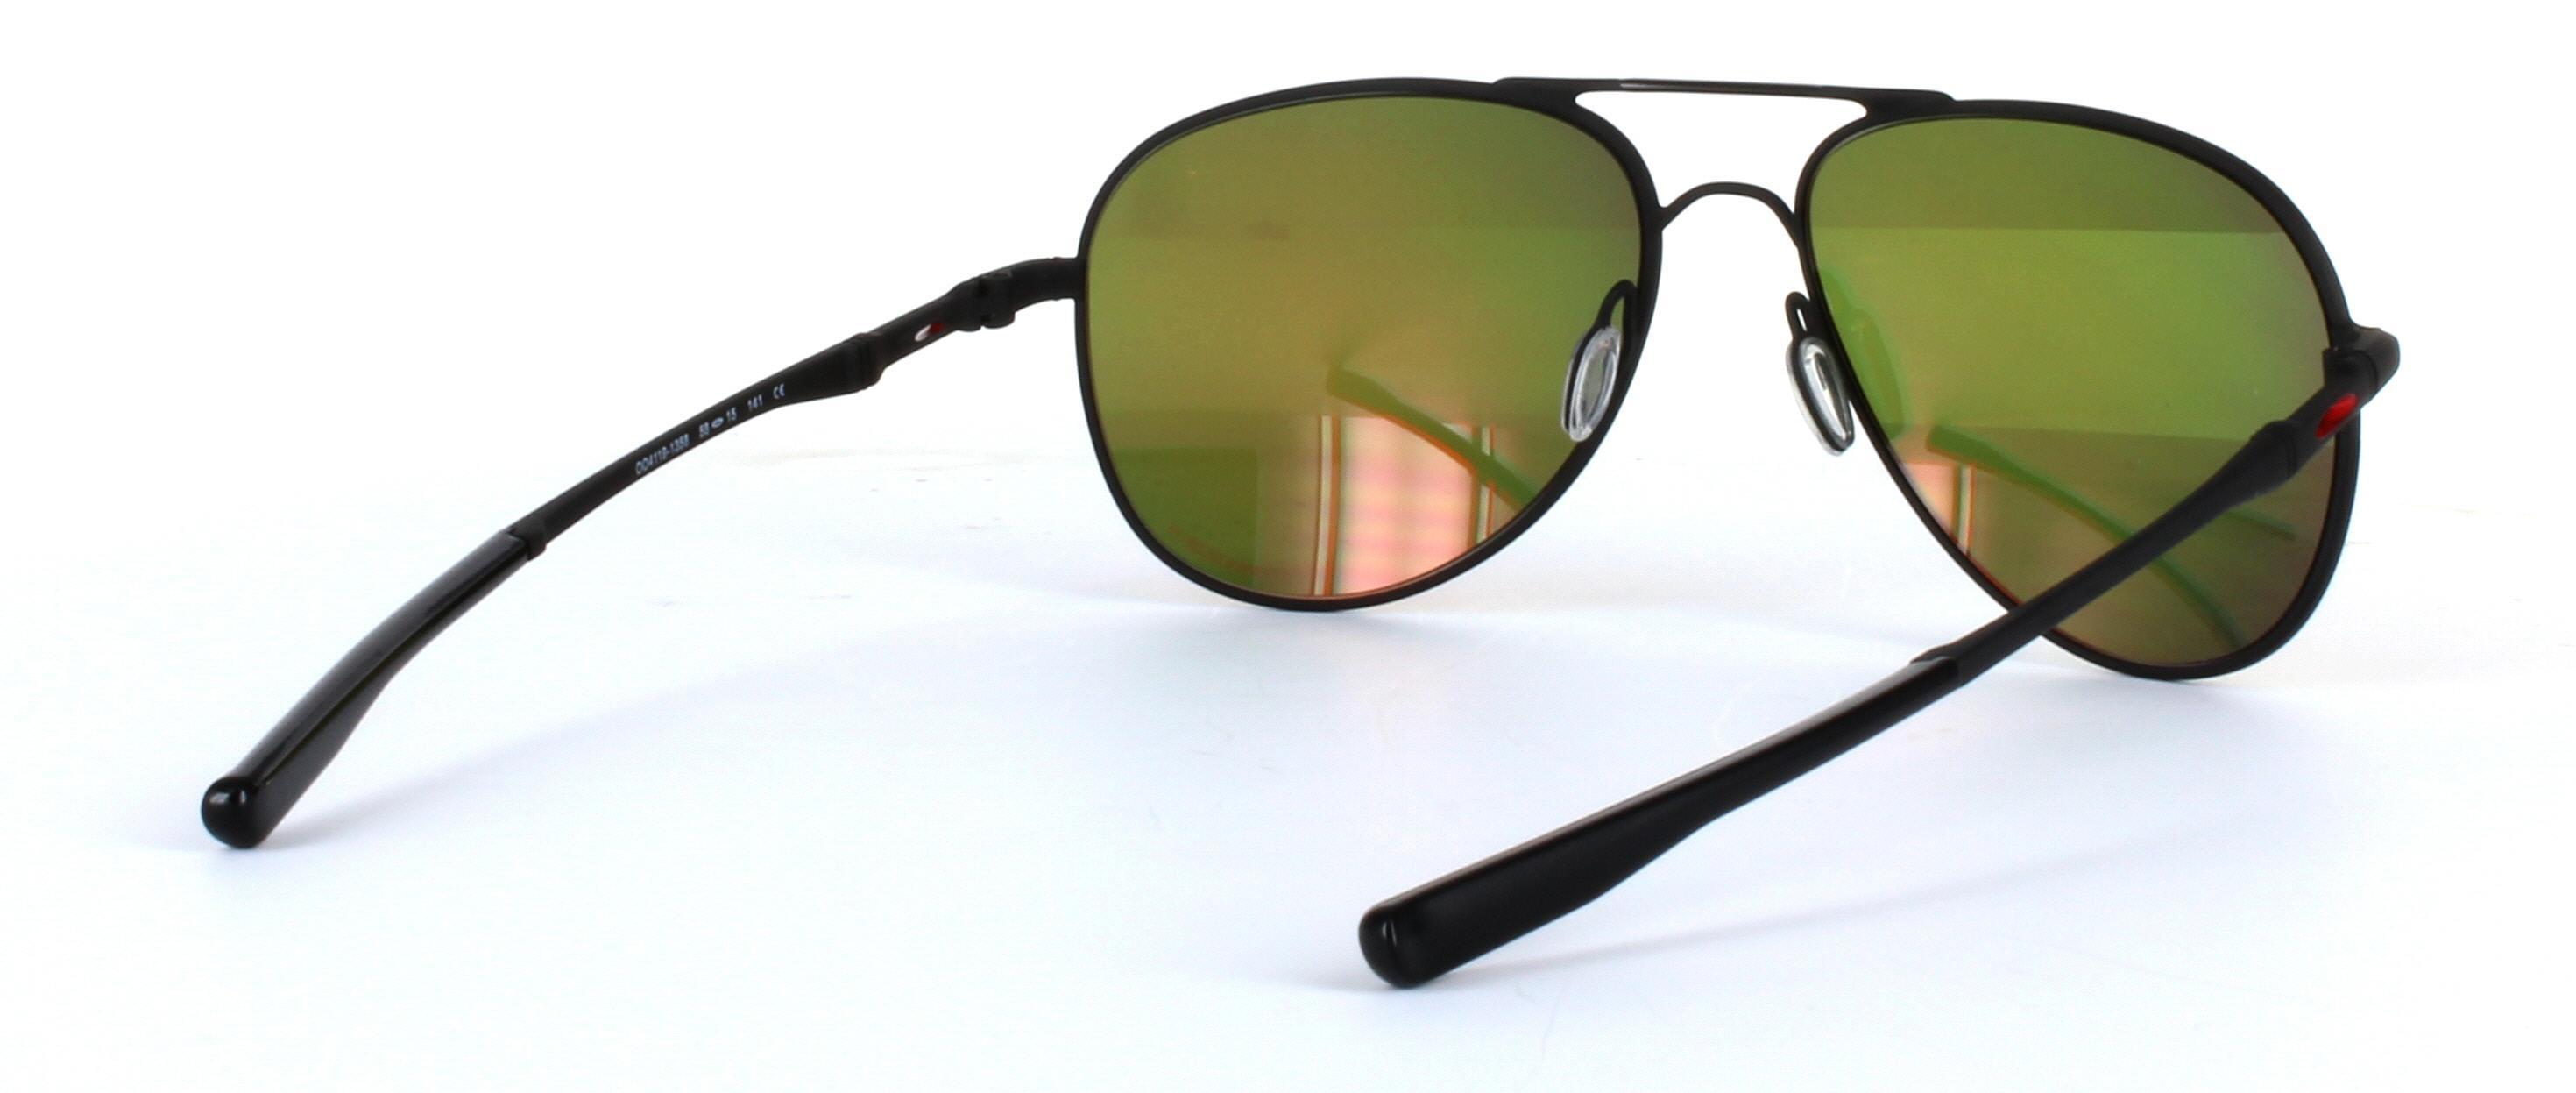 Oakley Elmont Black Full Rim Aviator Metal Prescription Sunglasses - Image View 4